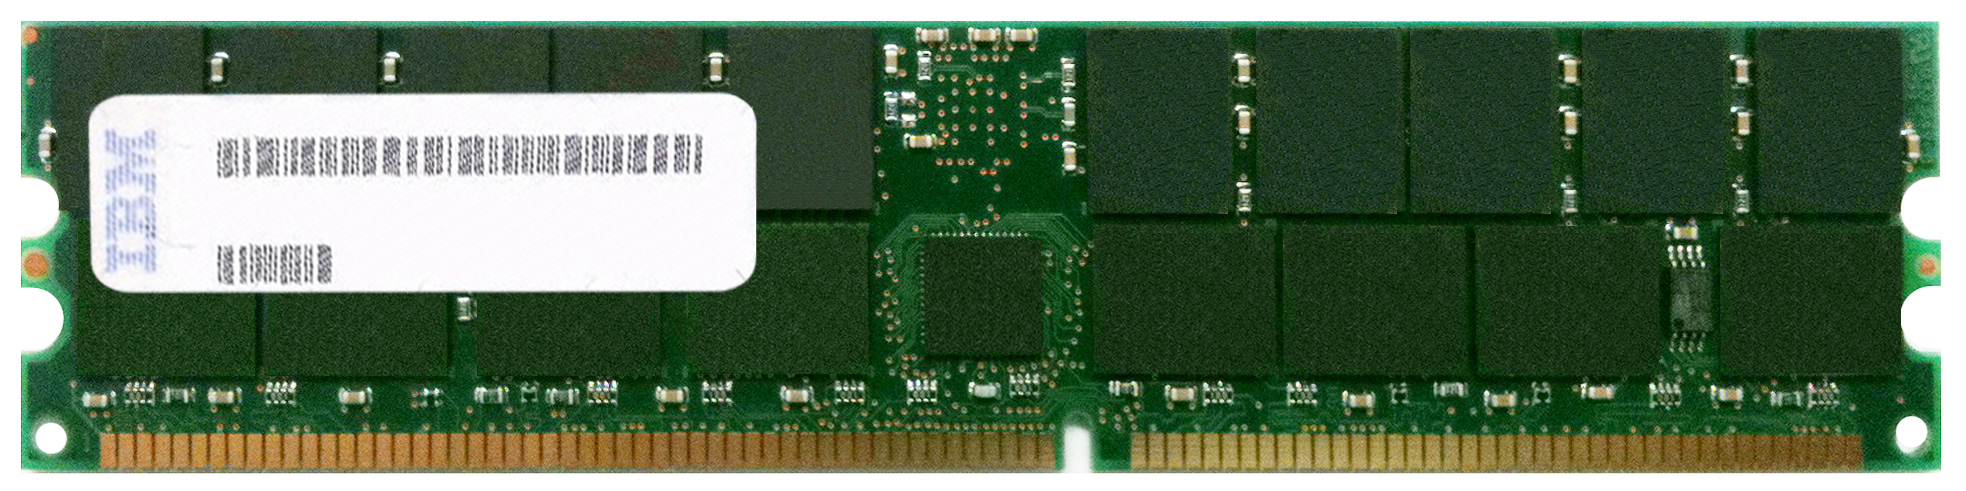 9117-7893 IBM Chipkill 4GB Kit (4 X 1GB) PC2-4200 DDR2-533MHz ECC Registered CL4 276-Pin DIMM Memory